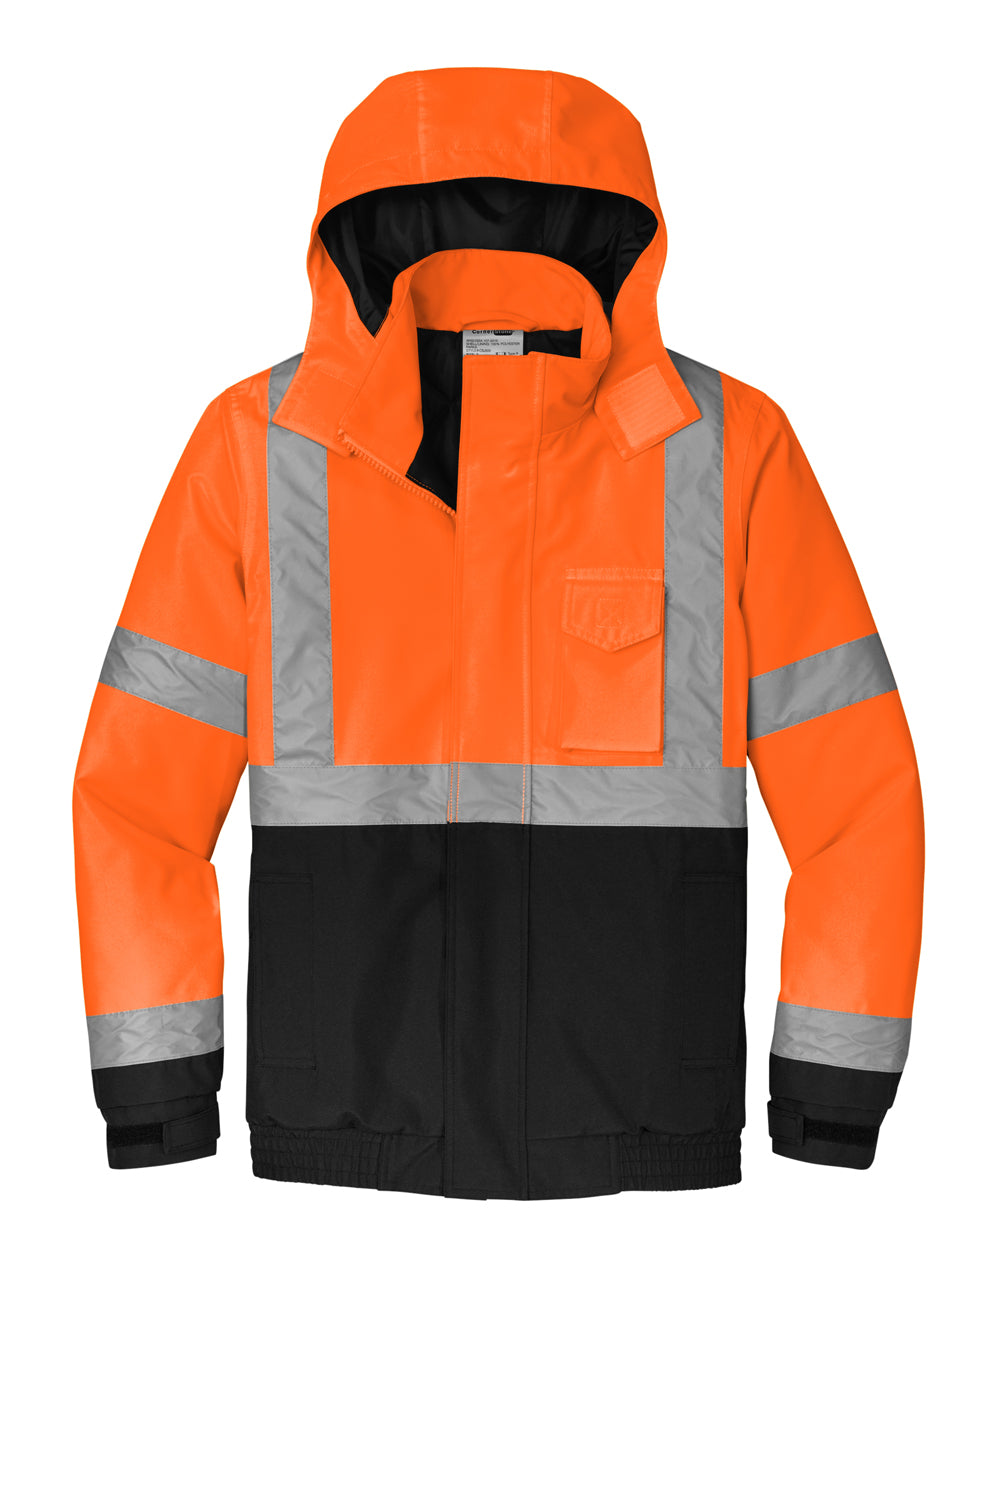 CornerStone CSJ500 Enhanced Visibility Insulated Full Zip Hooded Jacket Safety Orange Flat Front